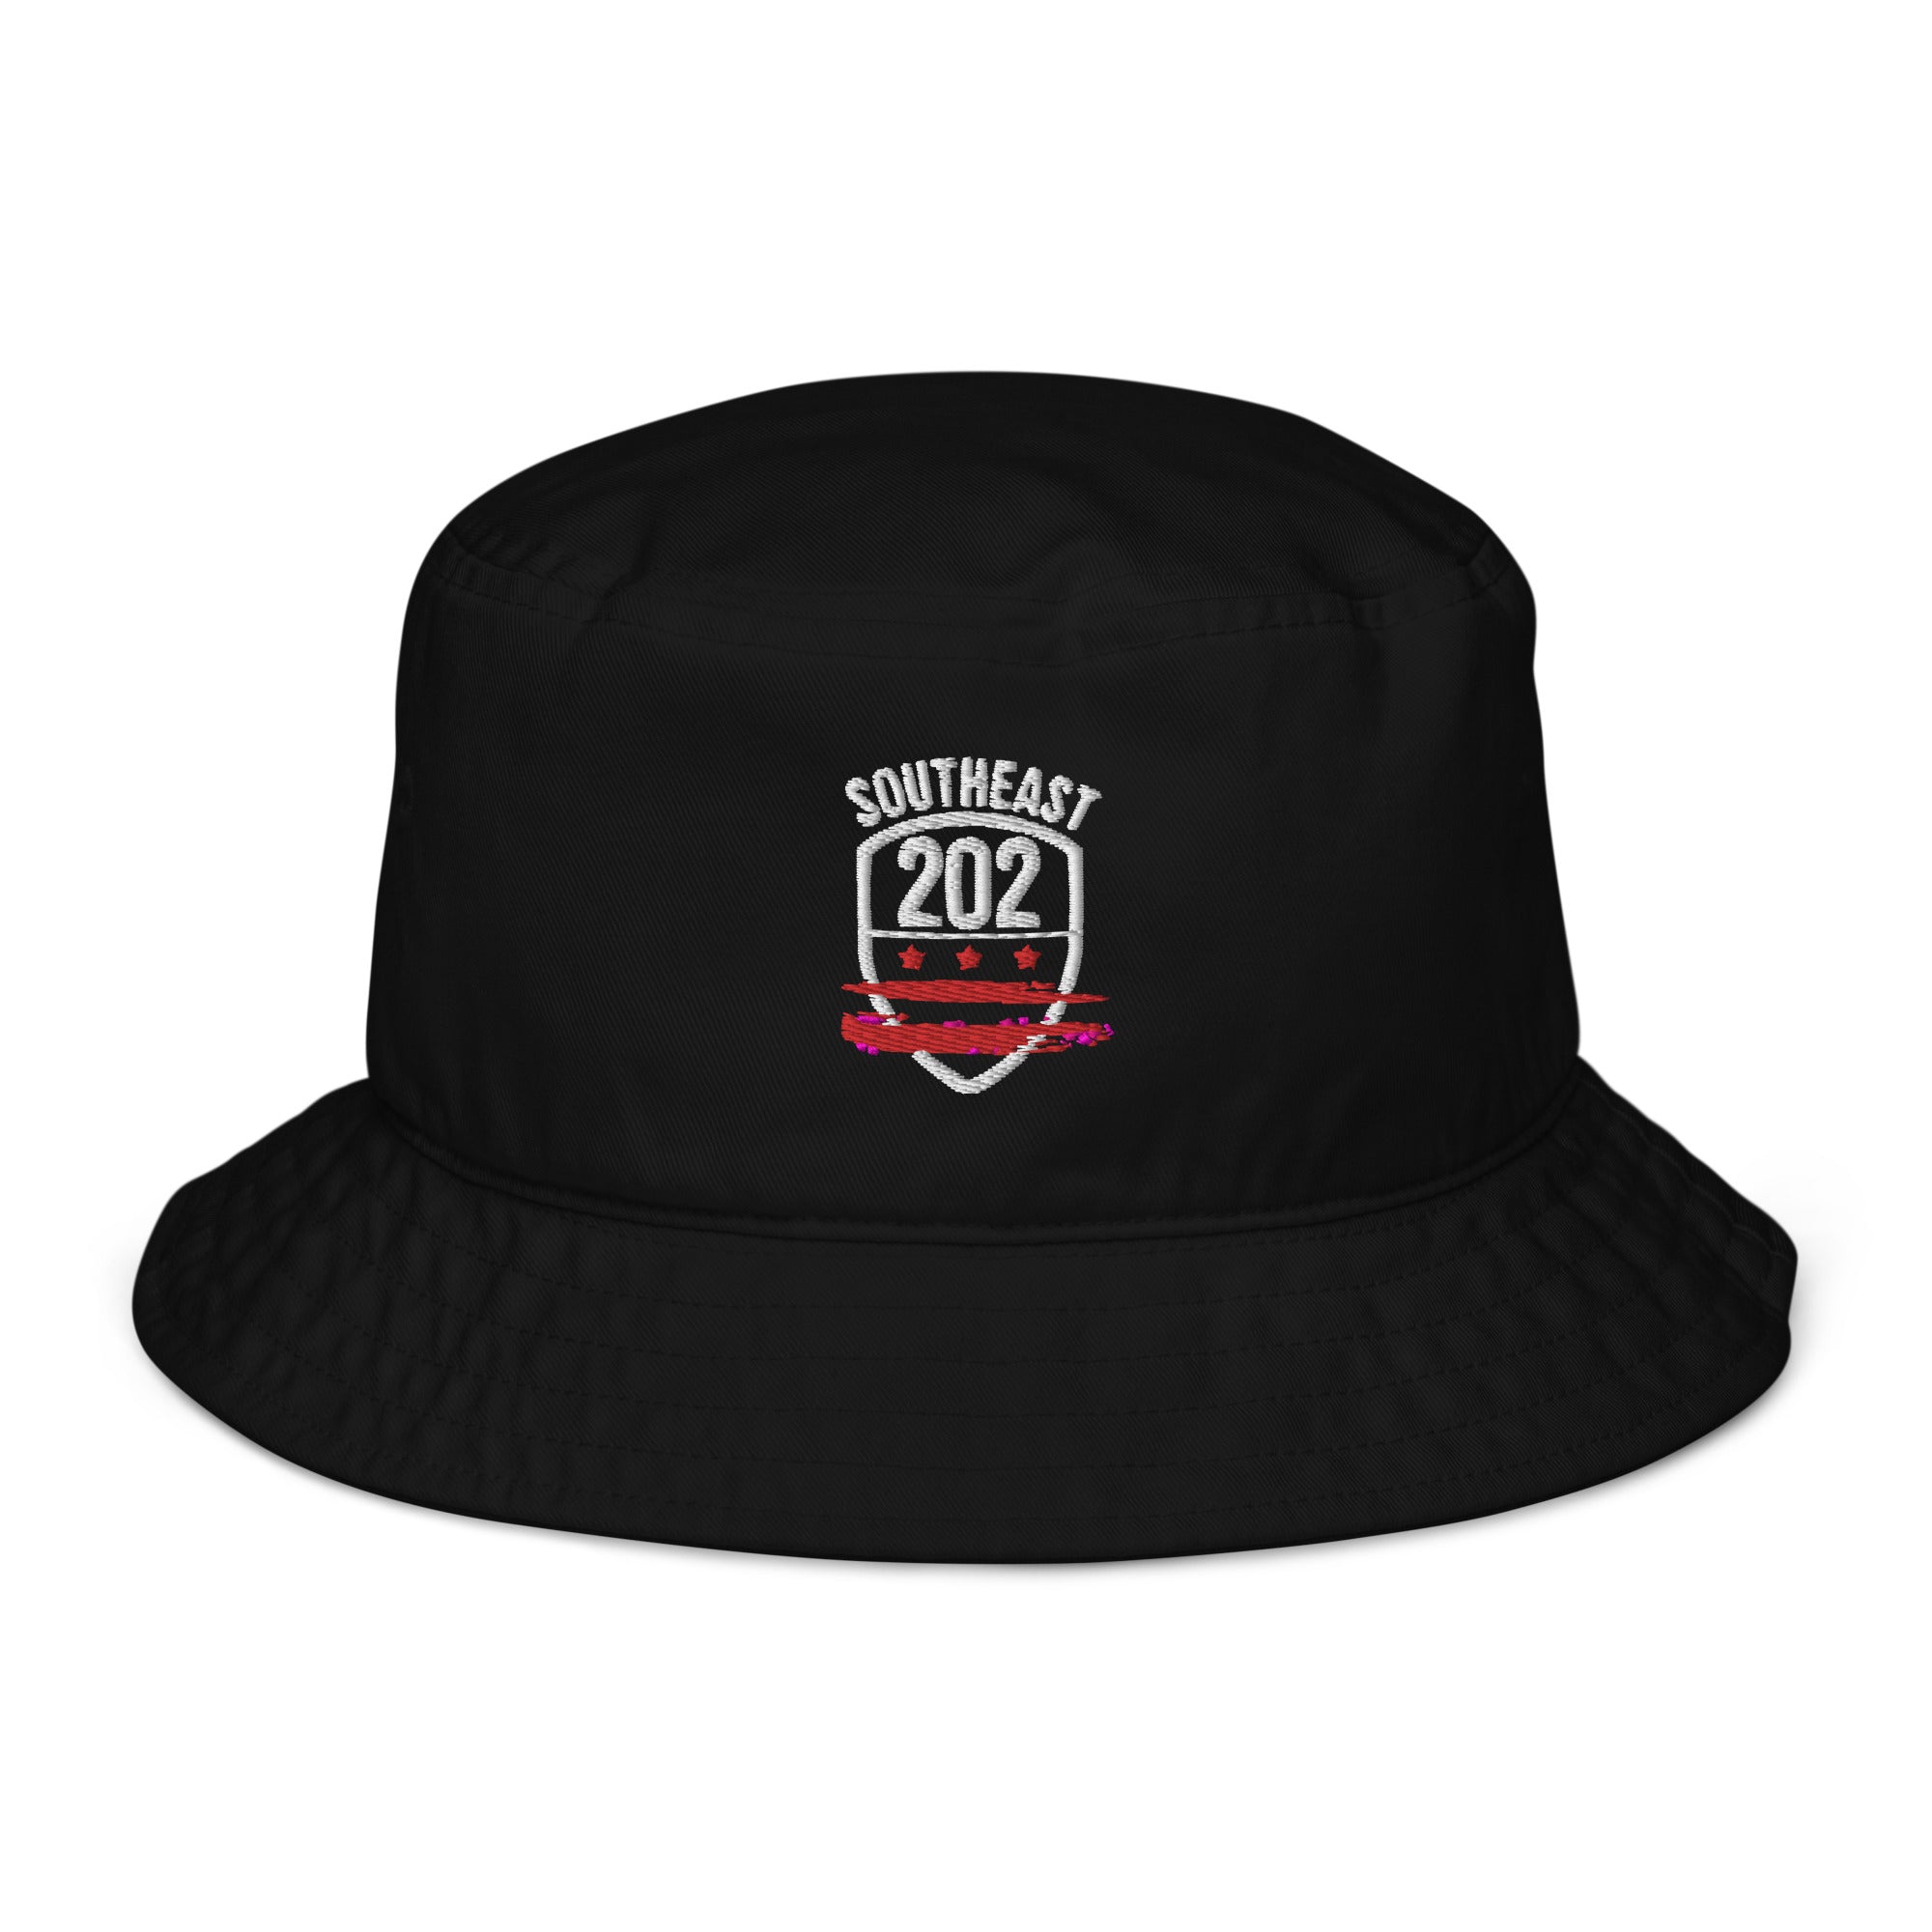 "SOUTHEAST / 202" (EMBLEM)  -Black Organic bucket hat